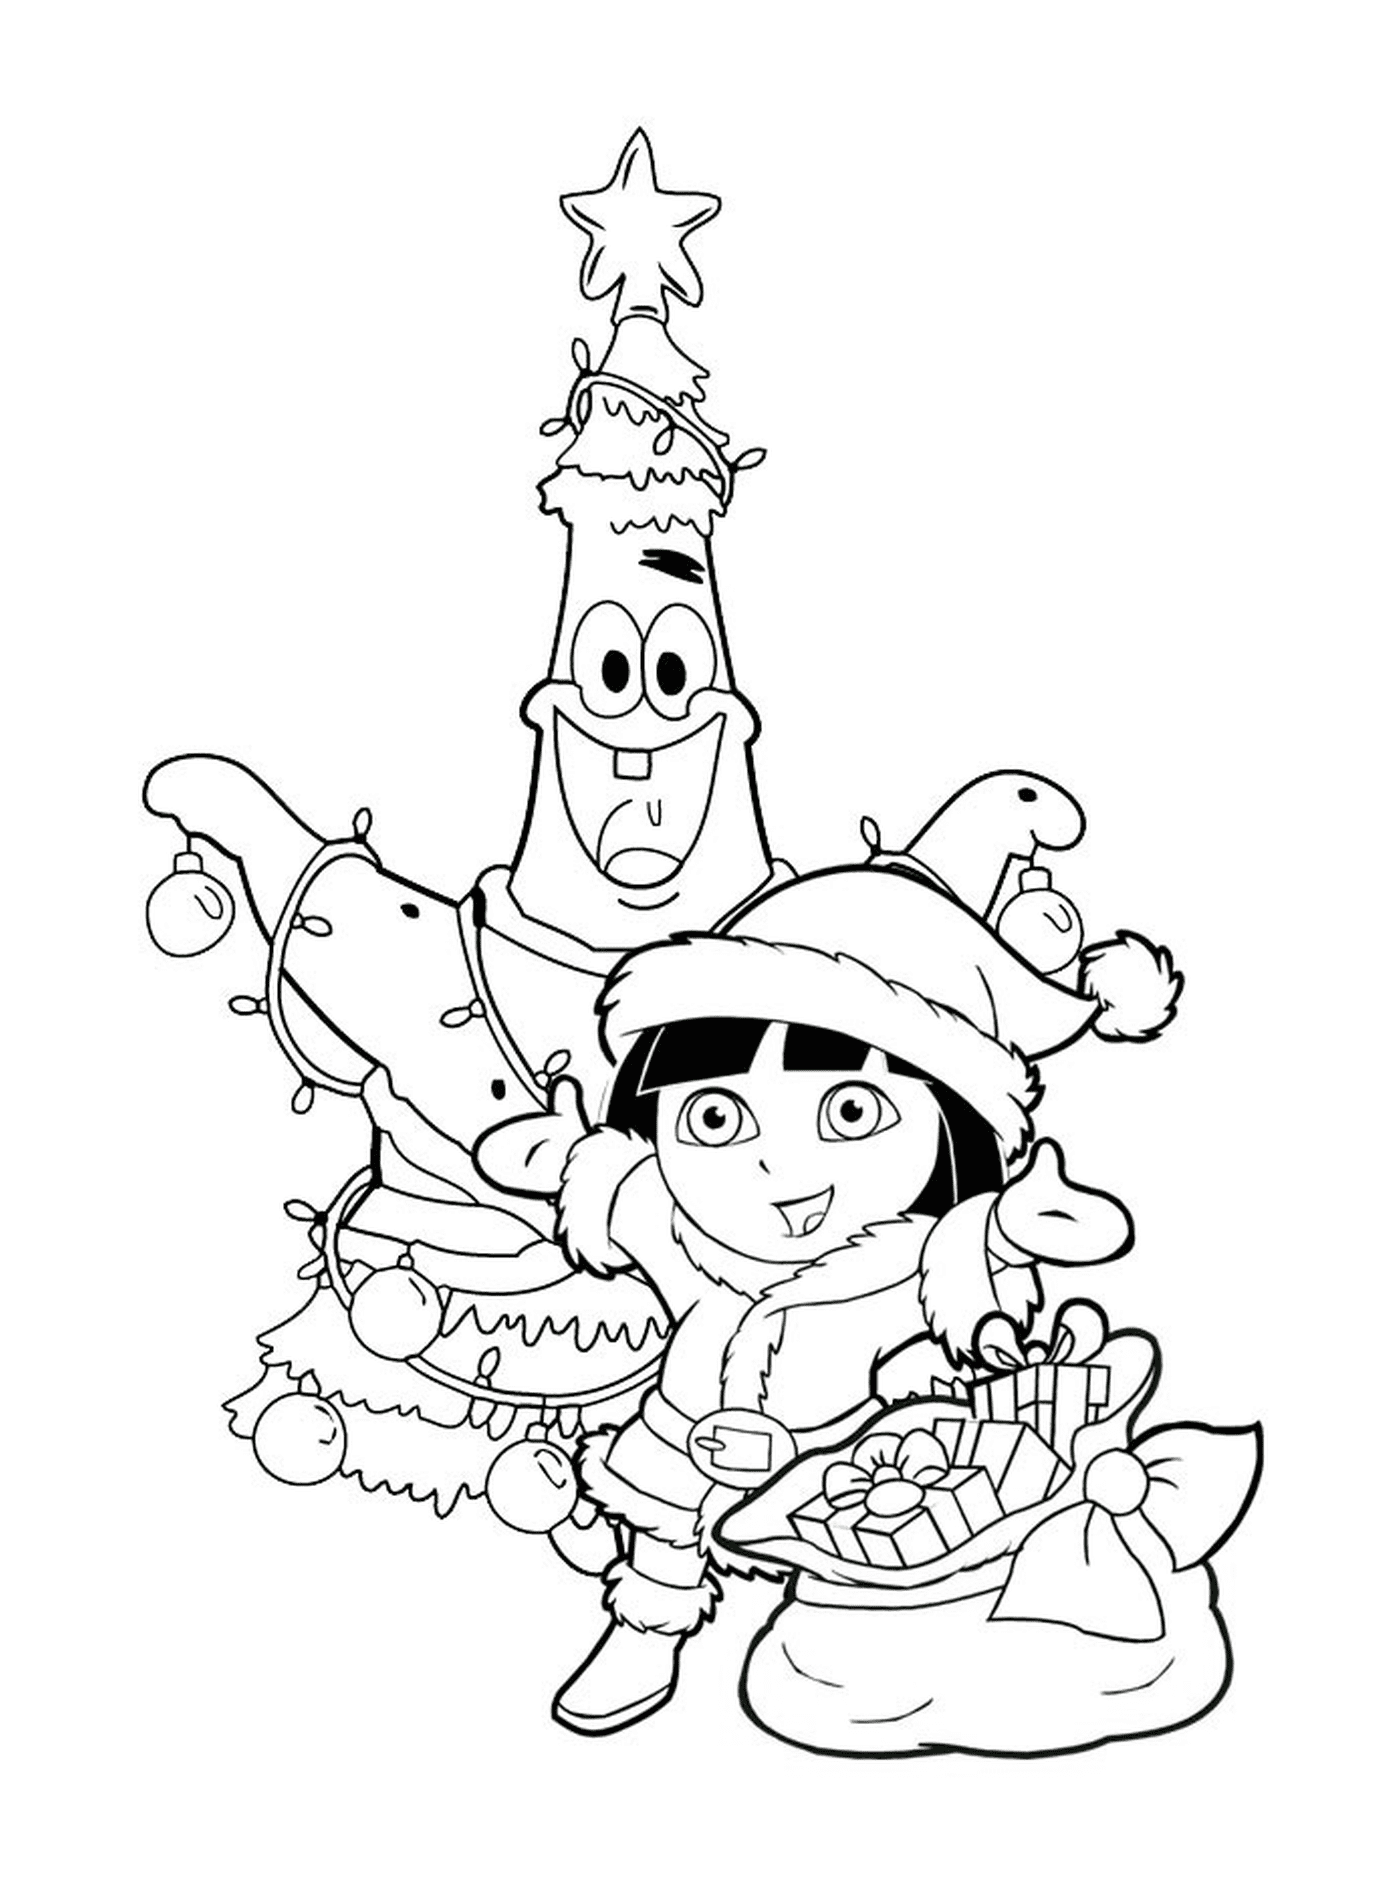  Dora celebrates Christmas with Patrick 